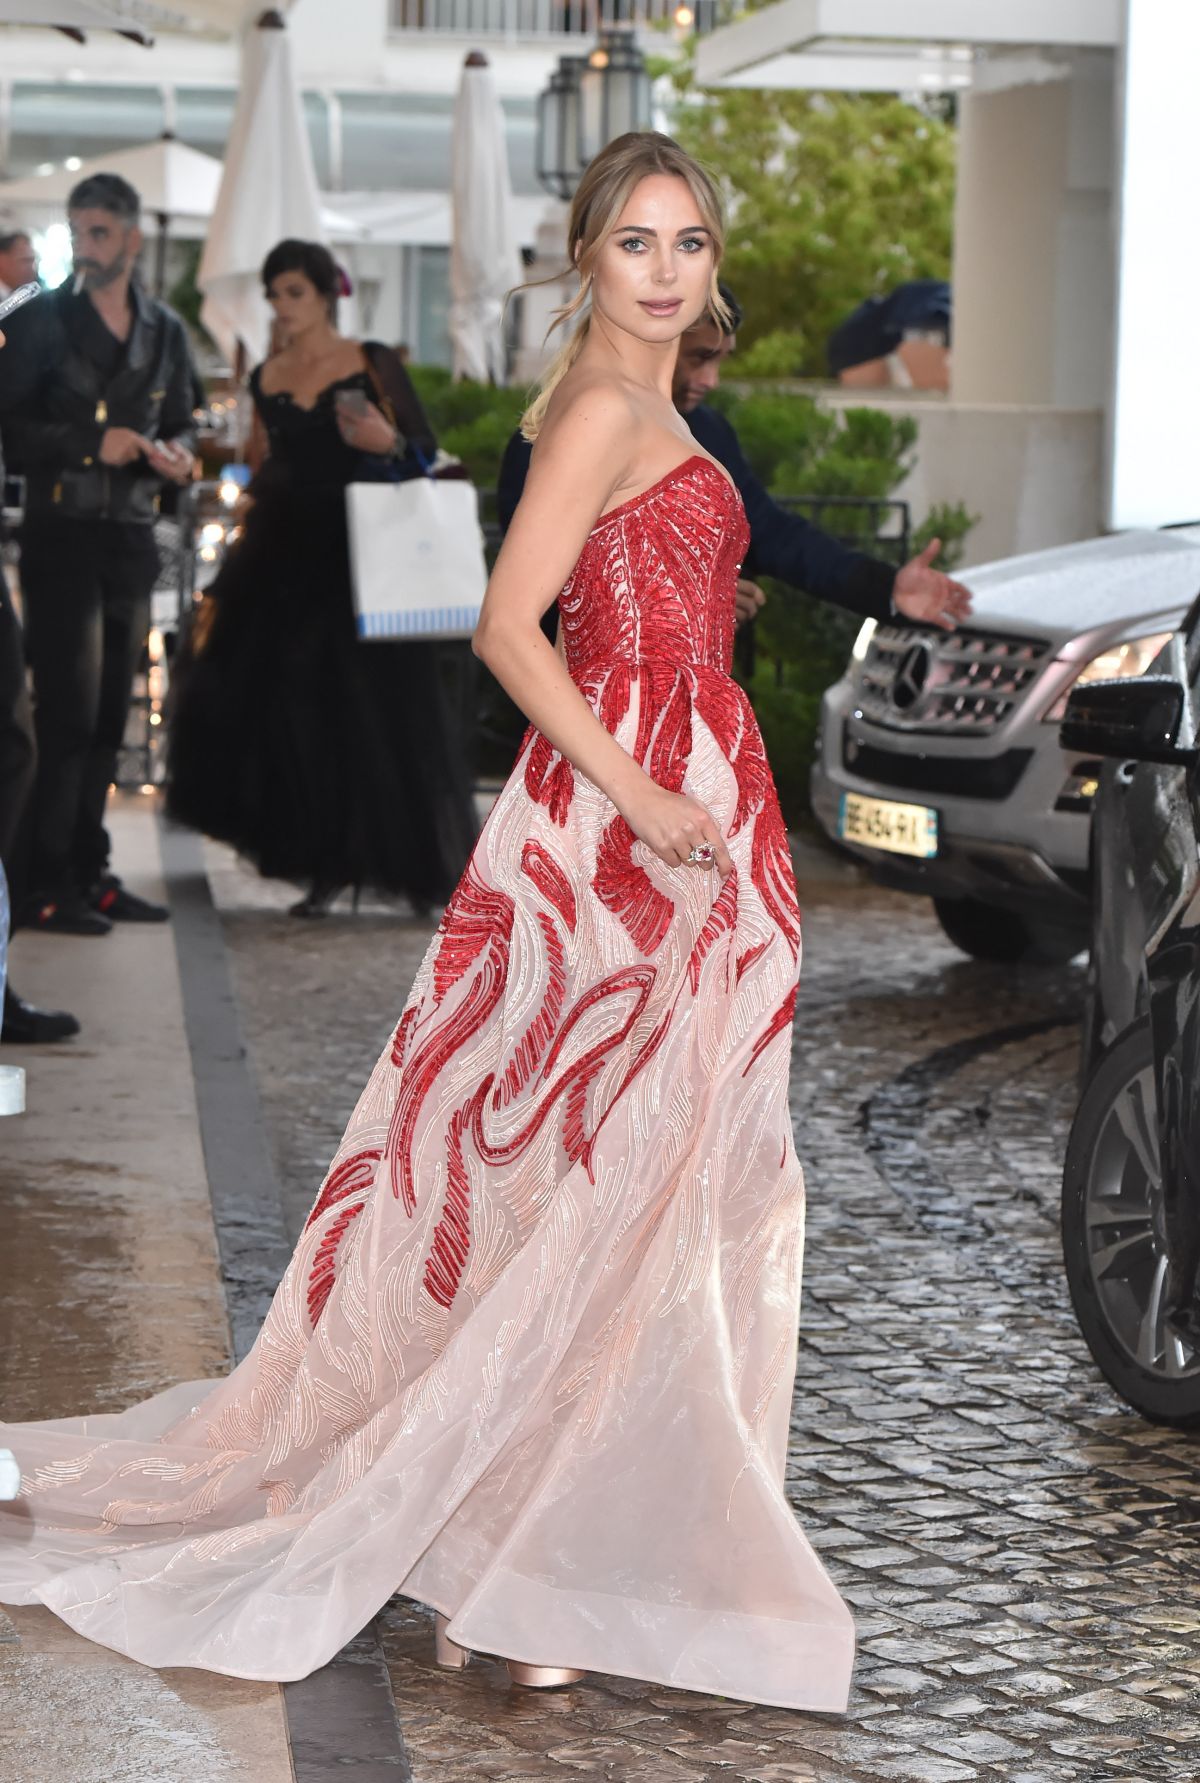 KIMBERLEY GARNER Leaves Her Hotel in Cannes 05/18/2019 – HawtCelebs